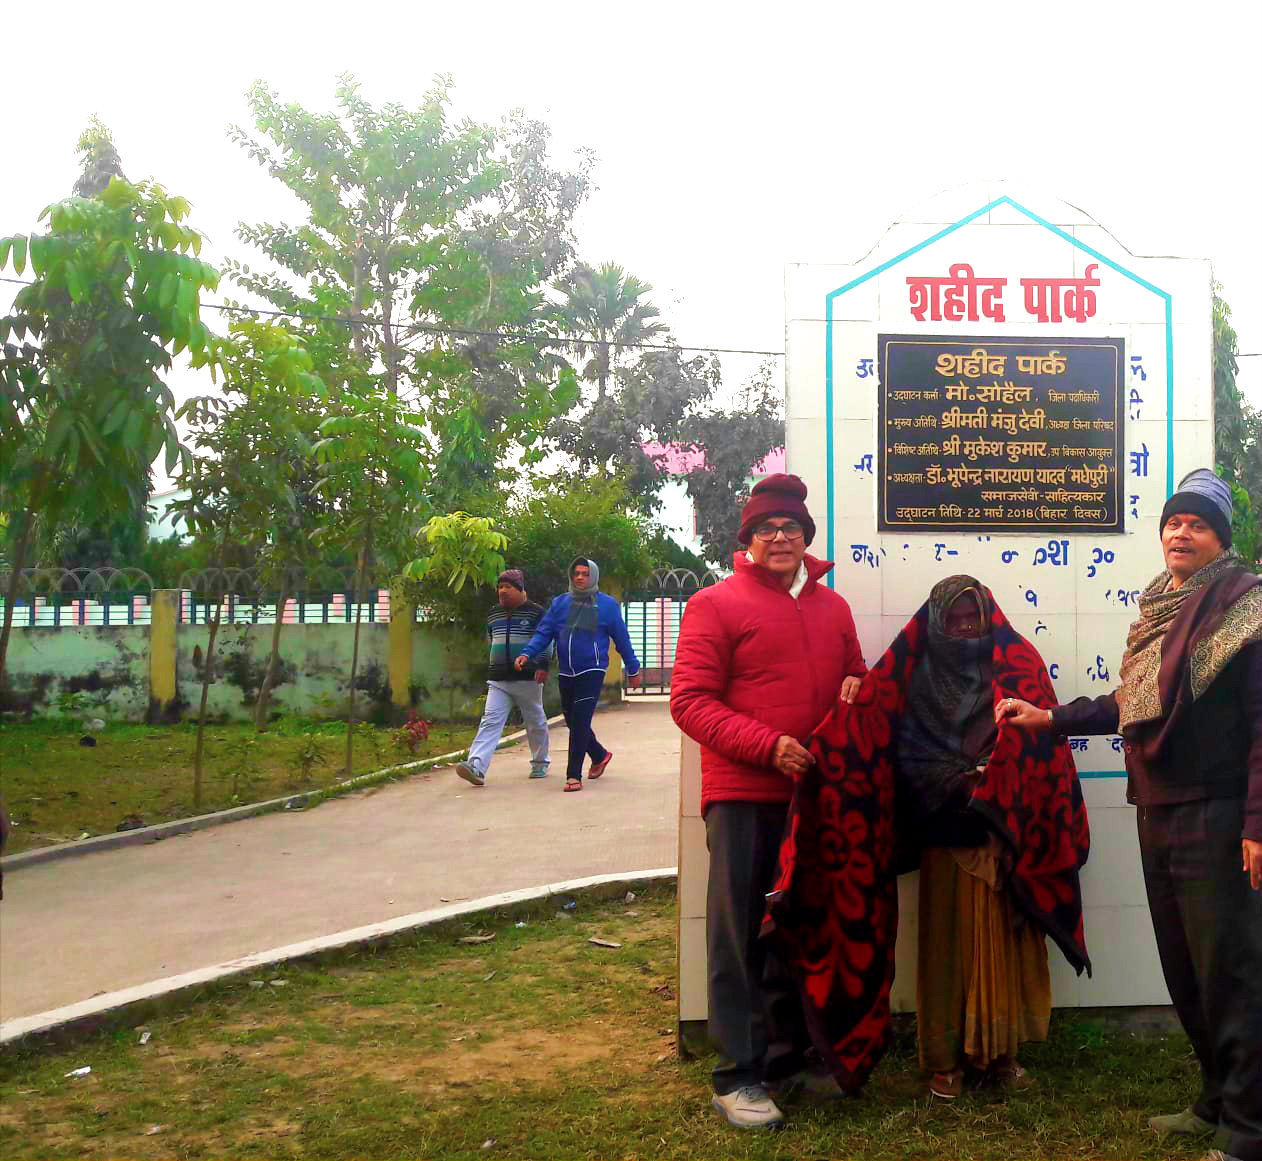 Dr.Madhepuri & Shri Nirmal Tiwari with very old woman during blanket distribution at Shahid Park, Madhepura.